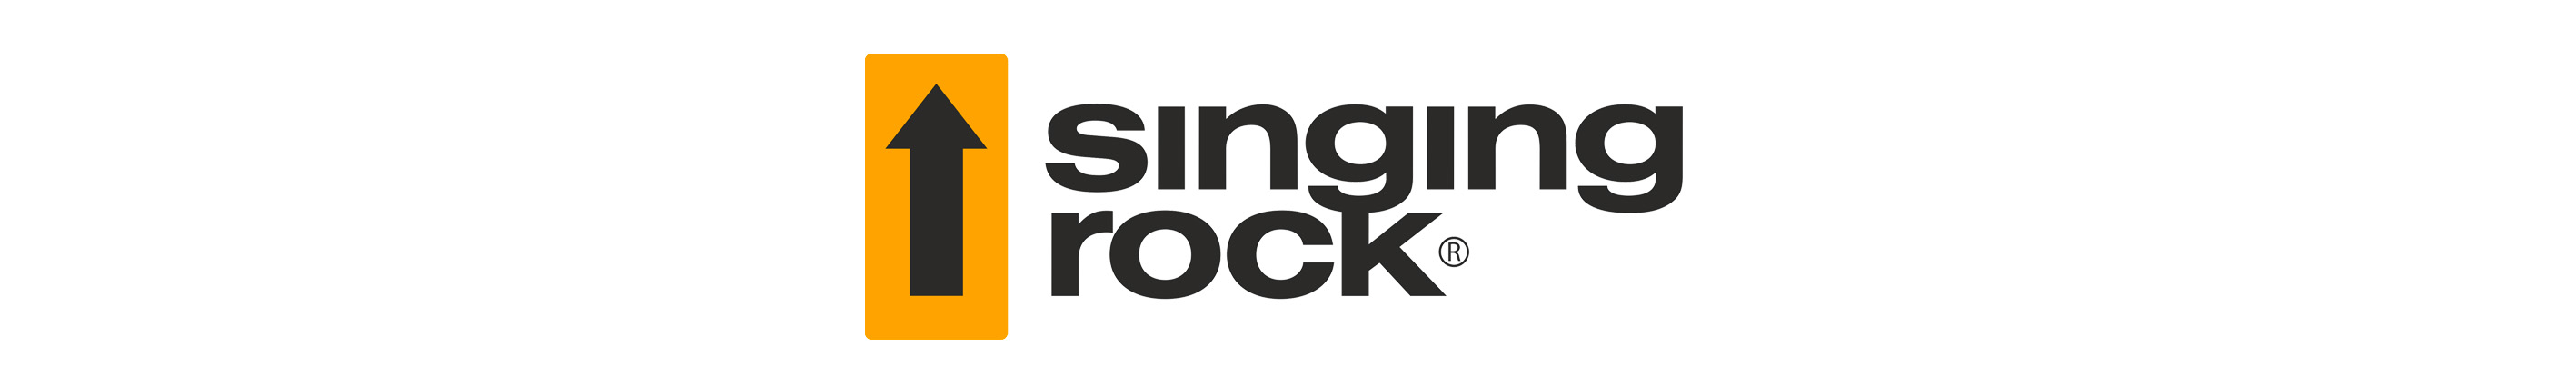 Singing Rock | Höhenarbeit | Toprope Shop